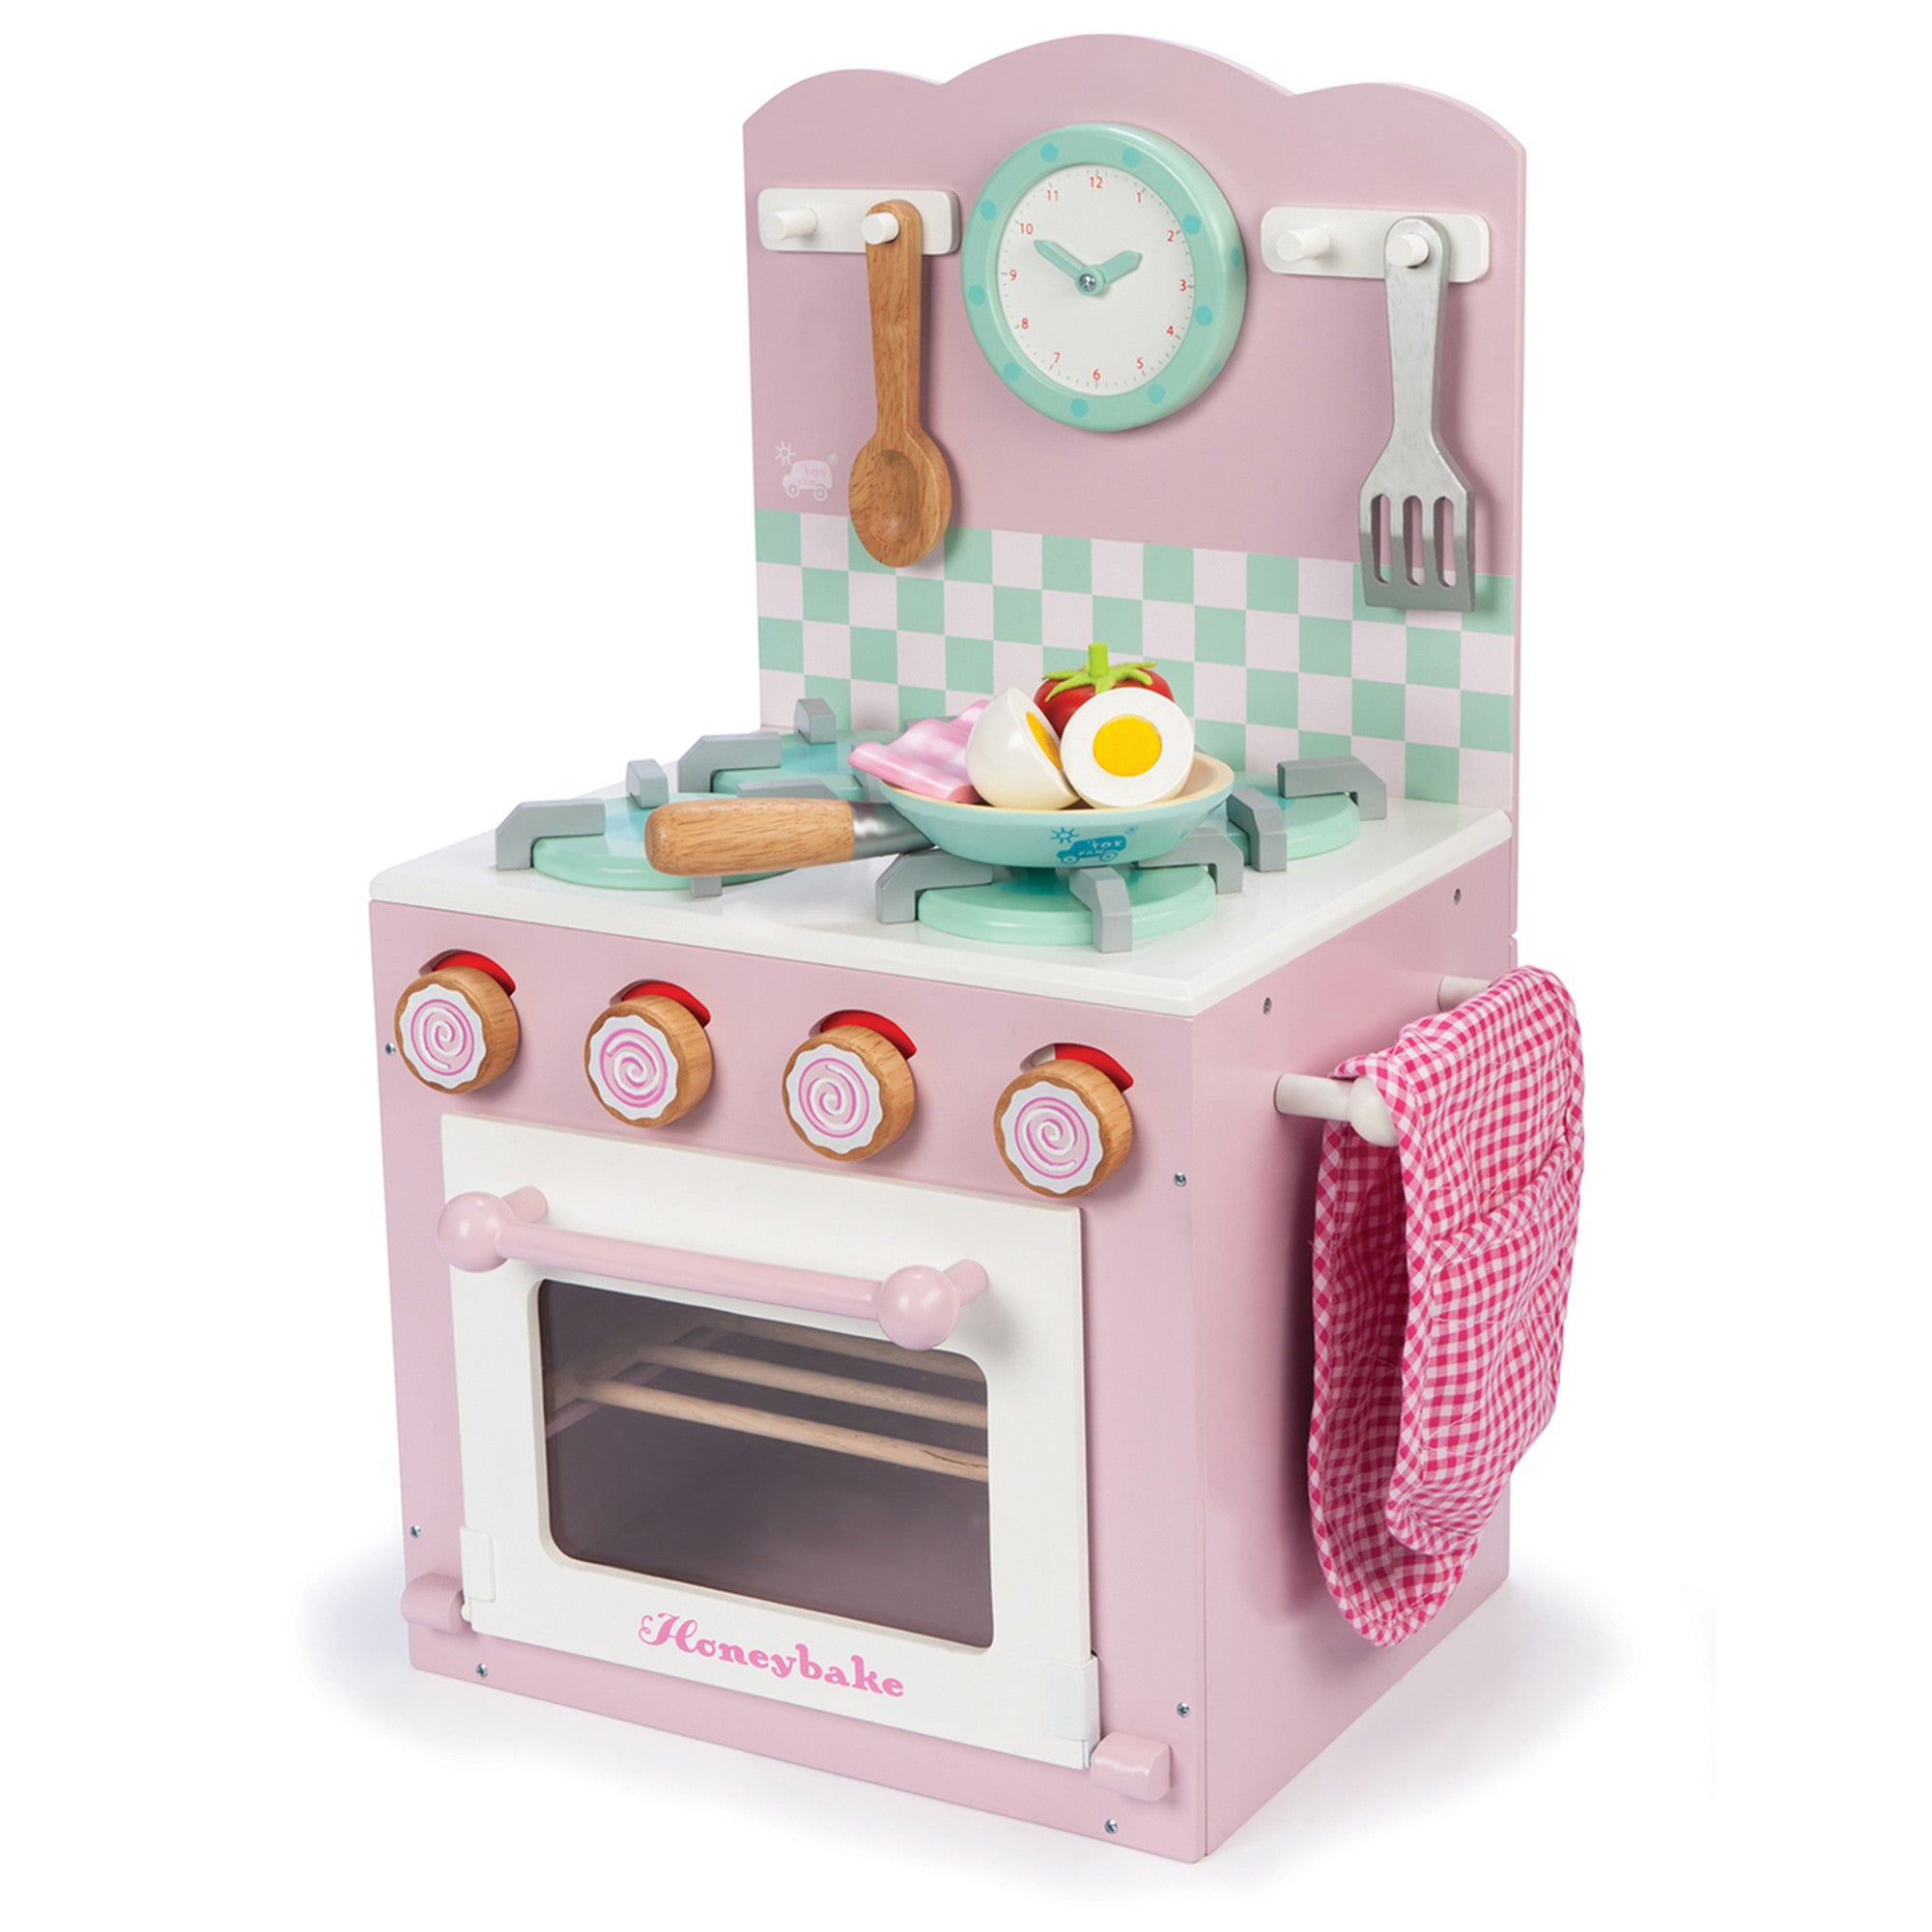 Le Toy Van Honeybake Home Kitchen Oven 